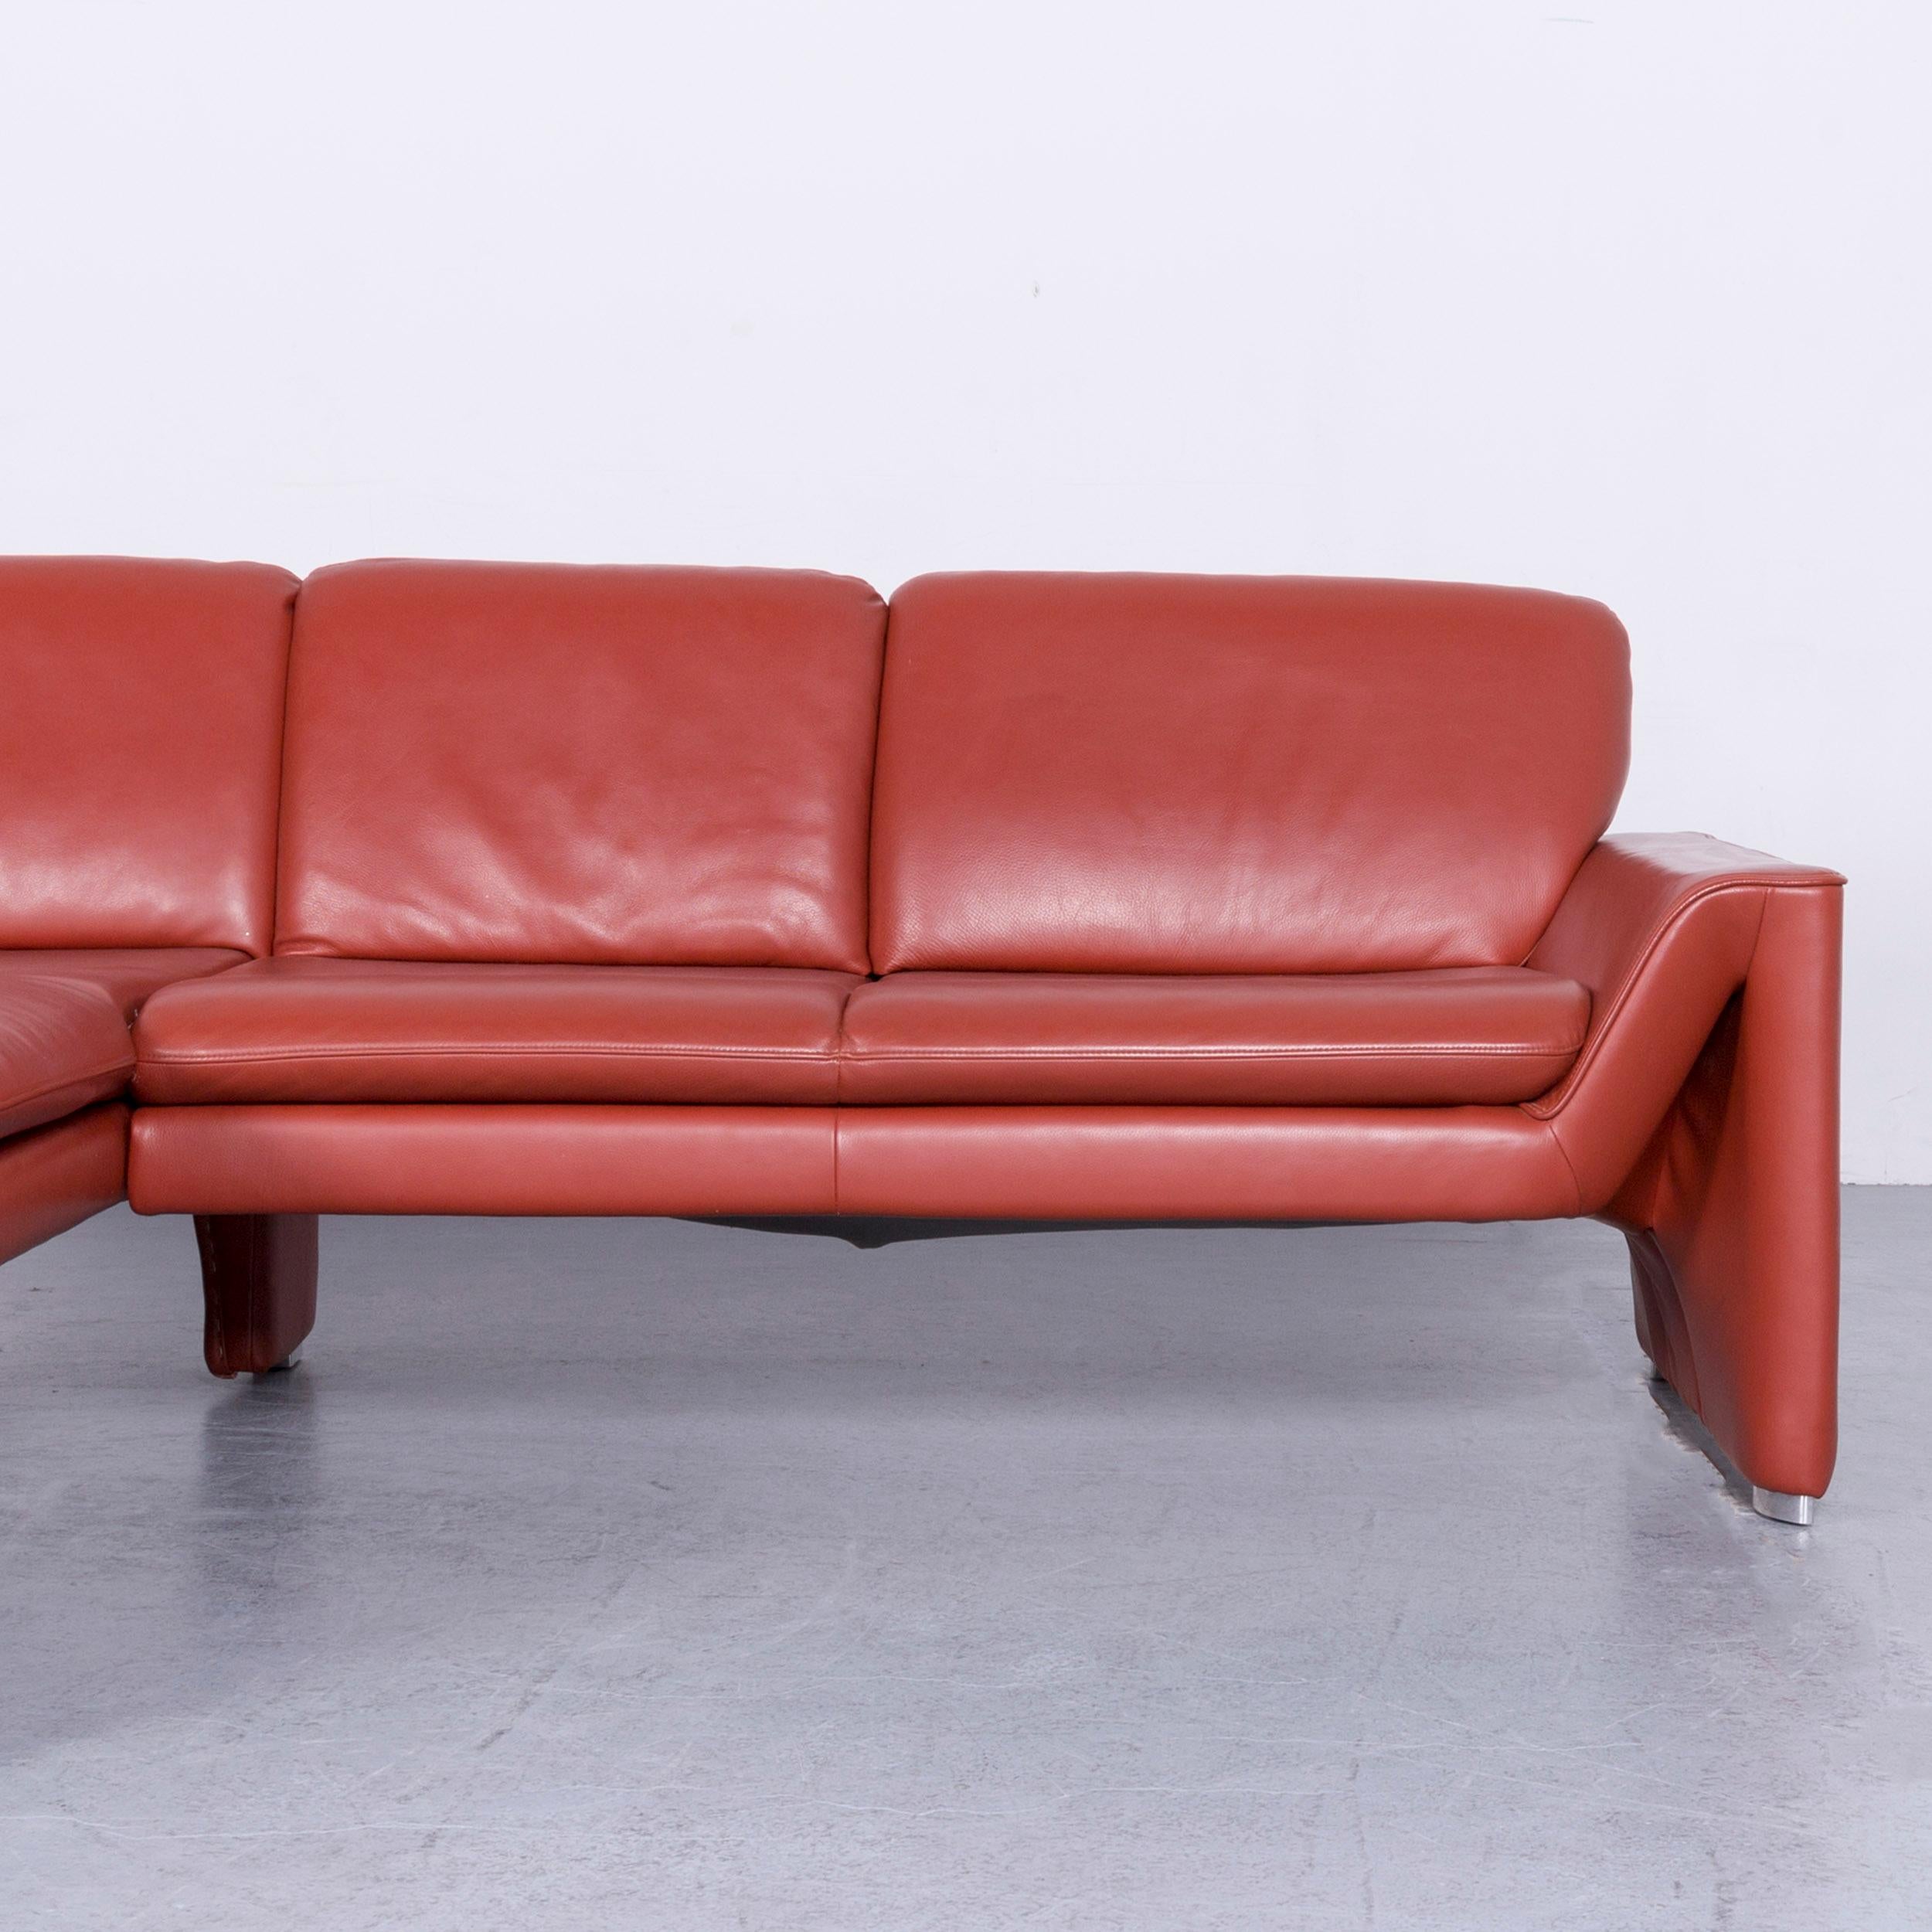 Contemporary Laauser Corvus Designer Sofa Corner-Sofa Footstool Set Leather Red Couch 